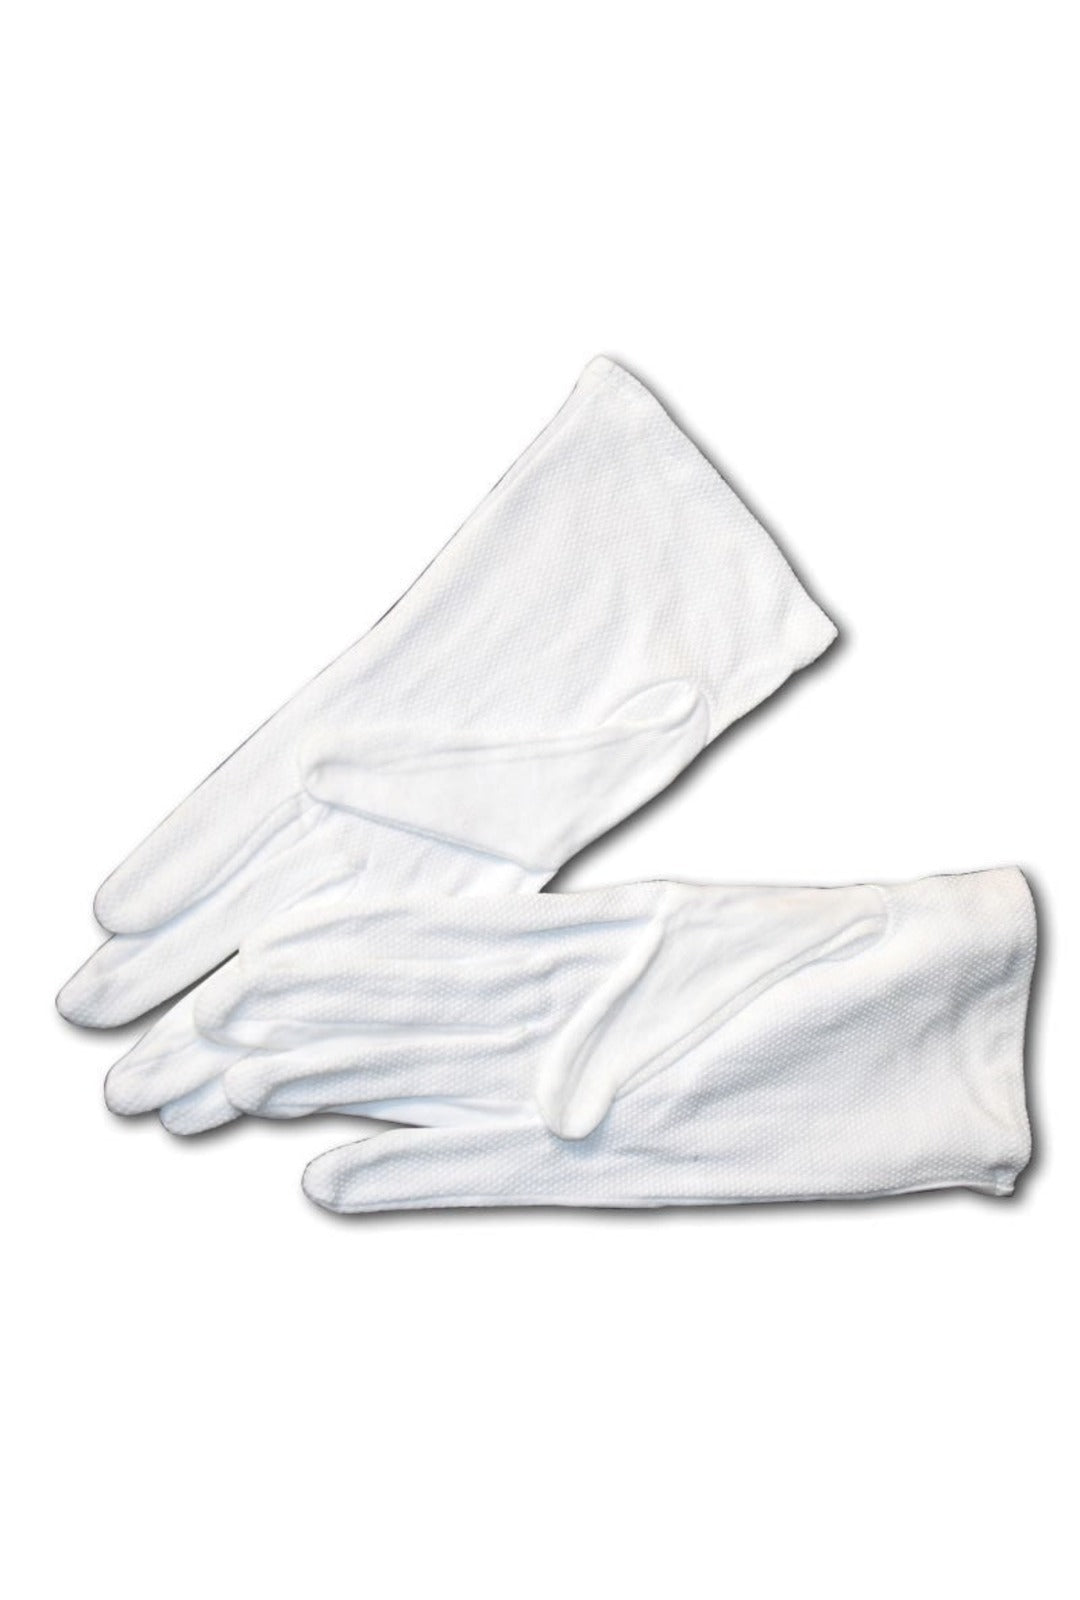 XL Men's White Gloves